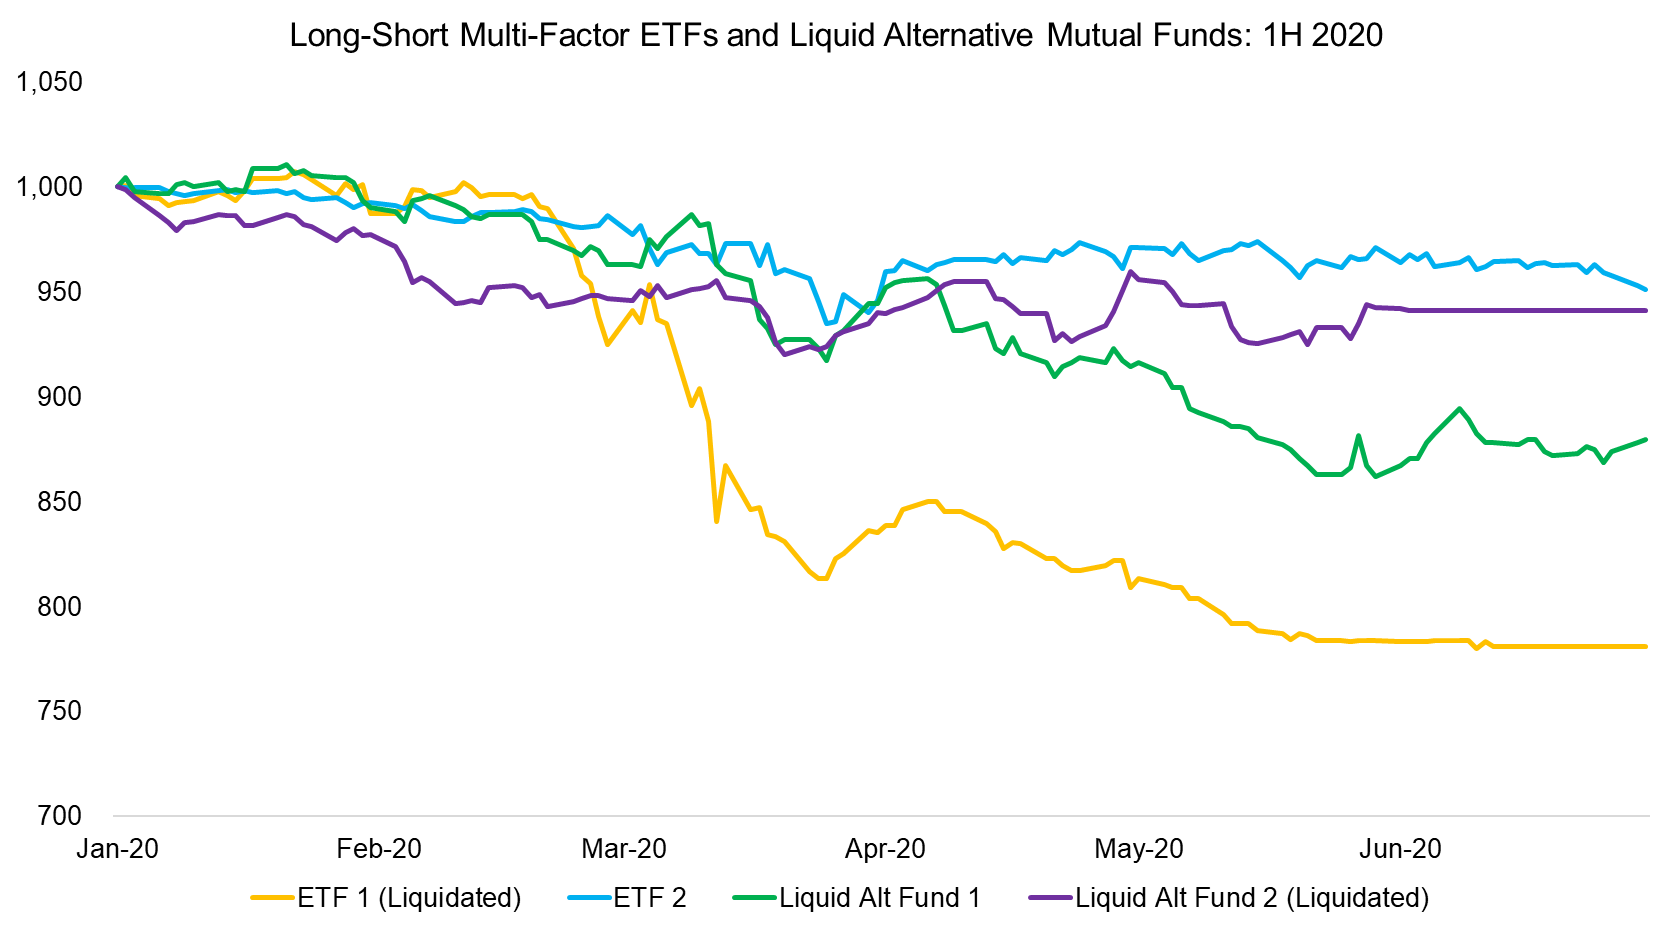 Long-Short Multi-Factor ETFs and Liquid Alternative Mutual Funds 1H 2020